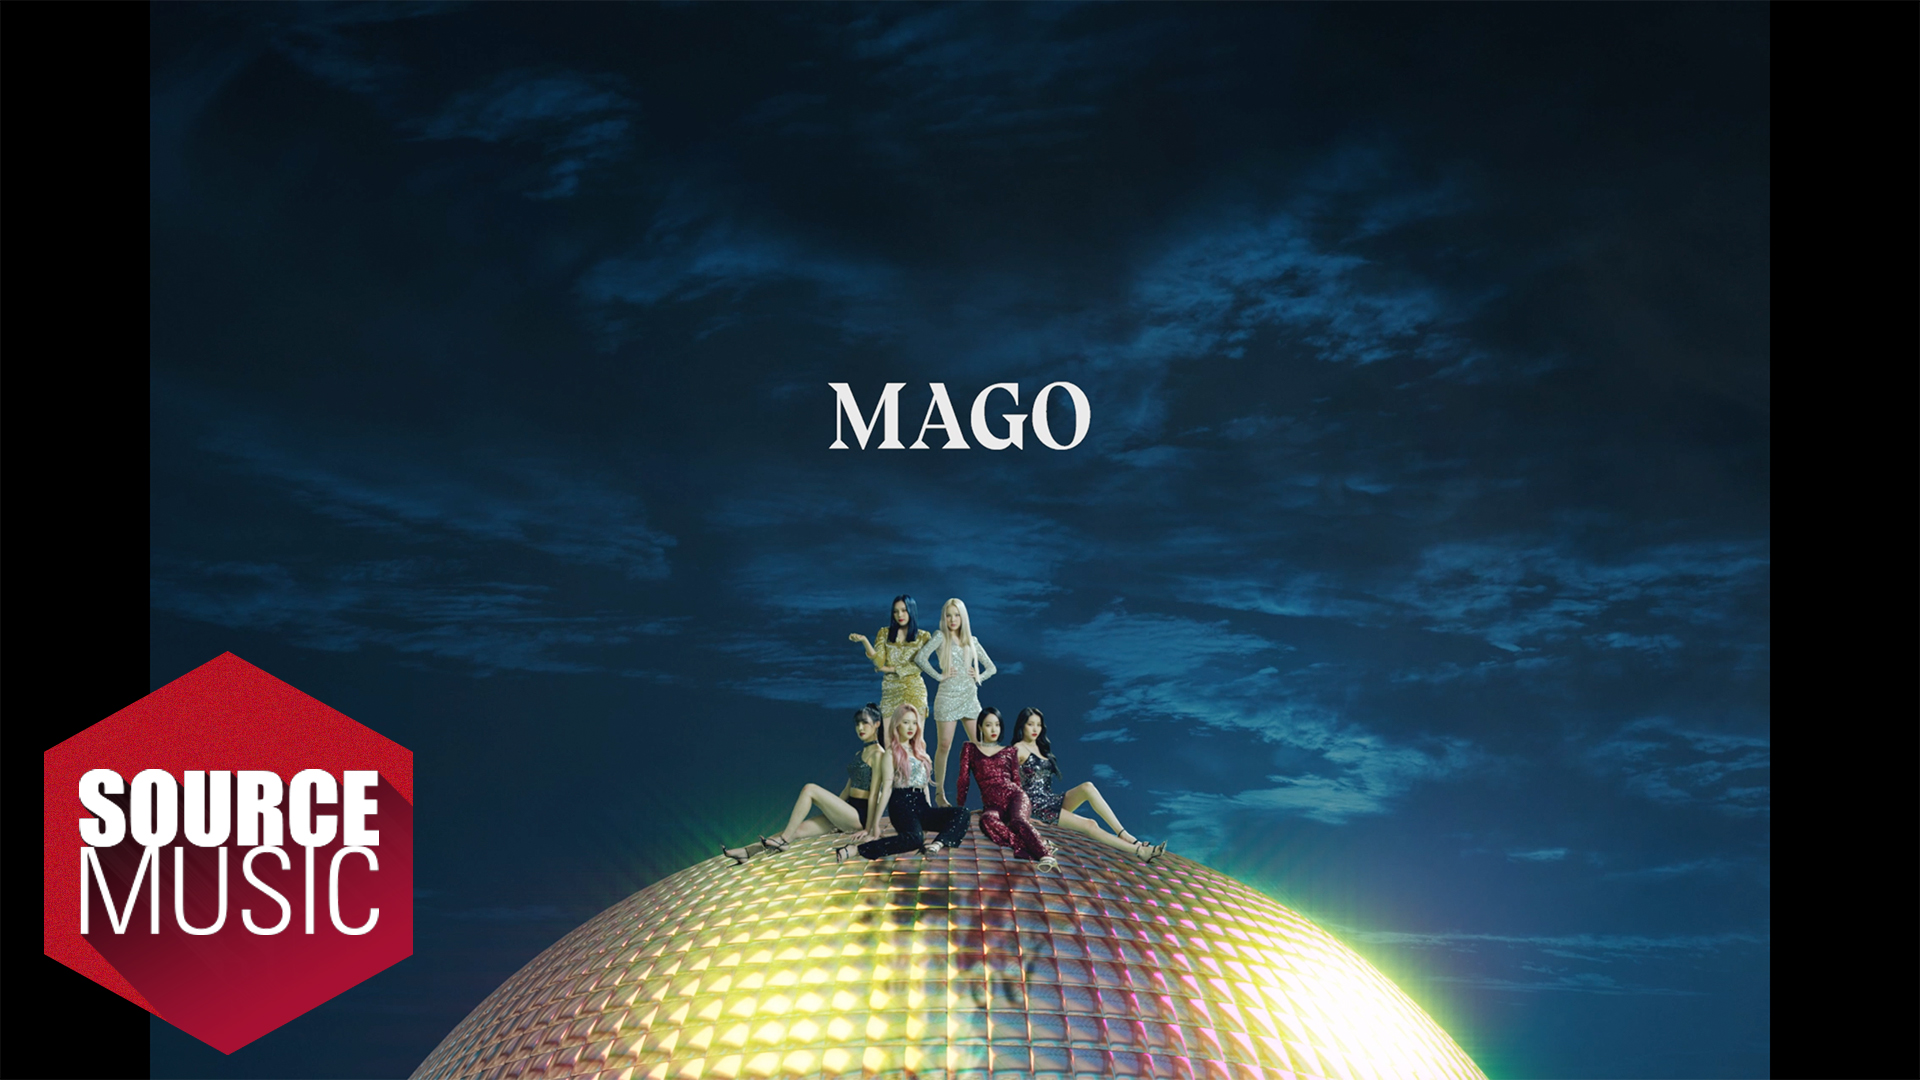 GFRIEND "MAGO" Official M/V